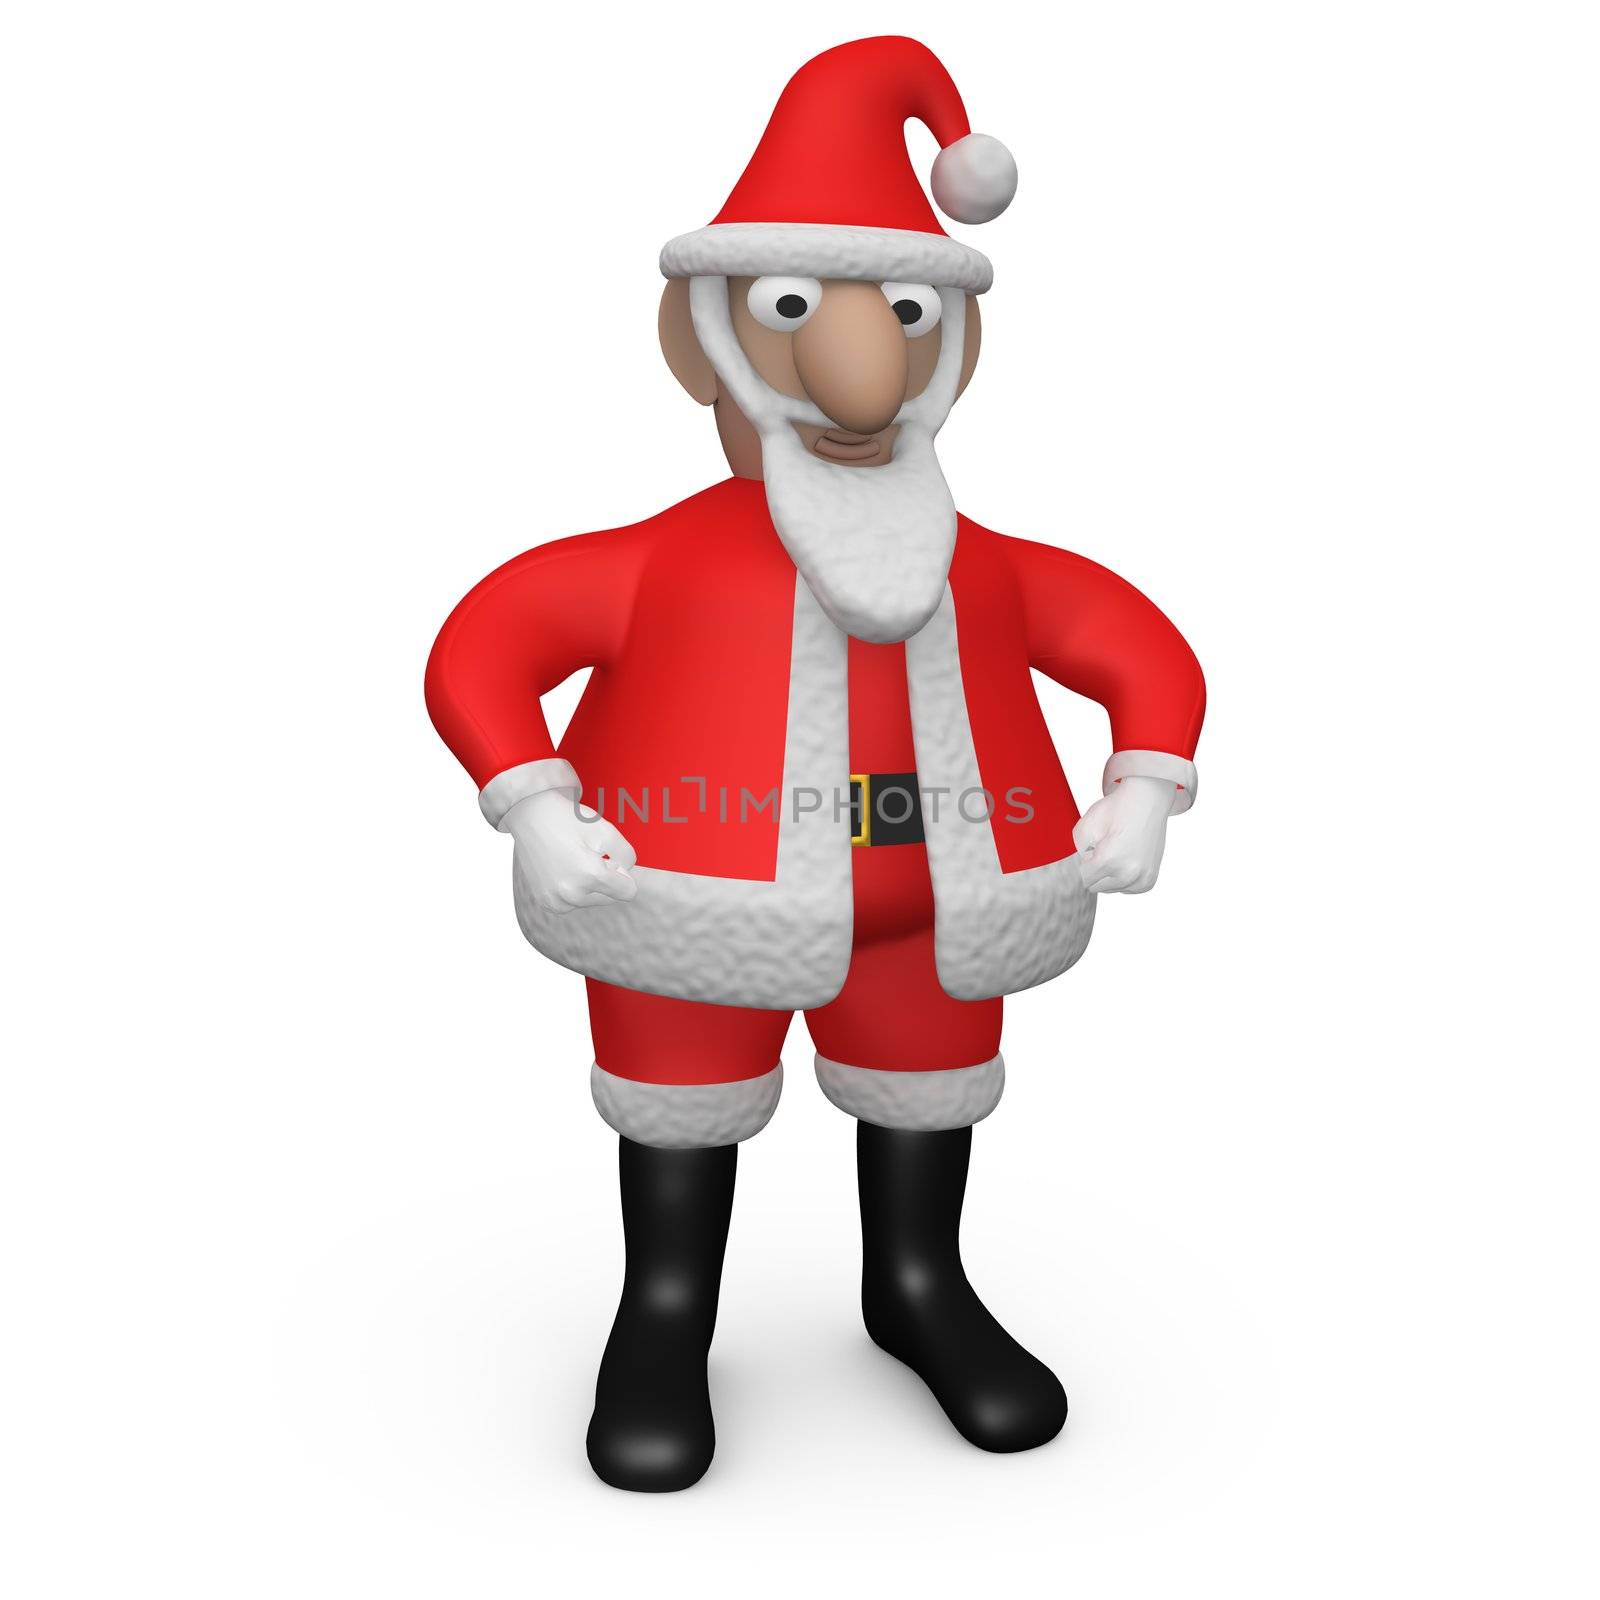 Computer generated image - Santa-Claus.